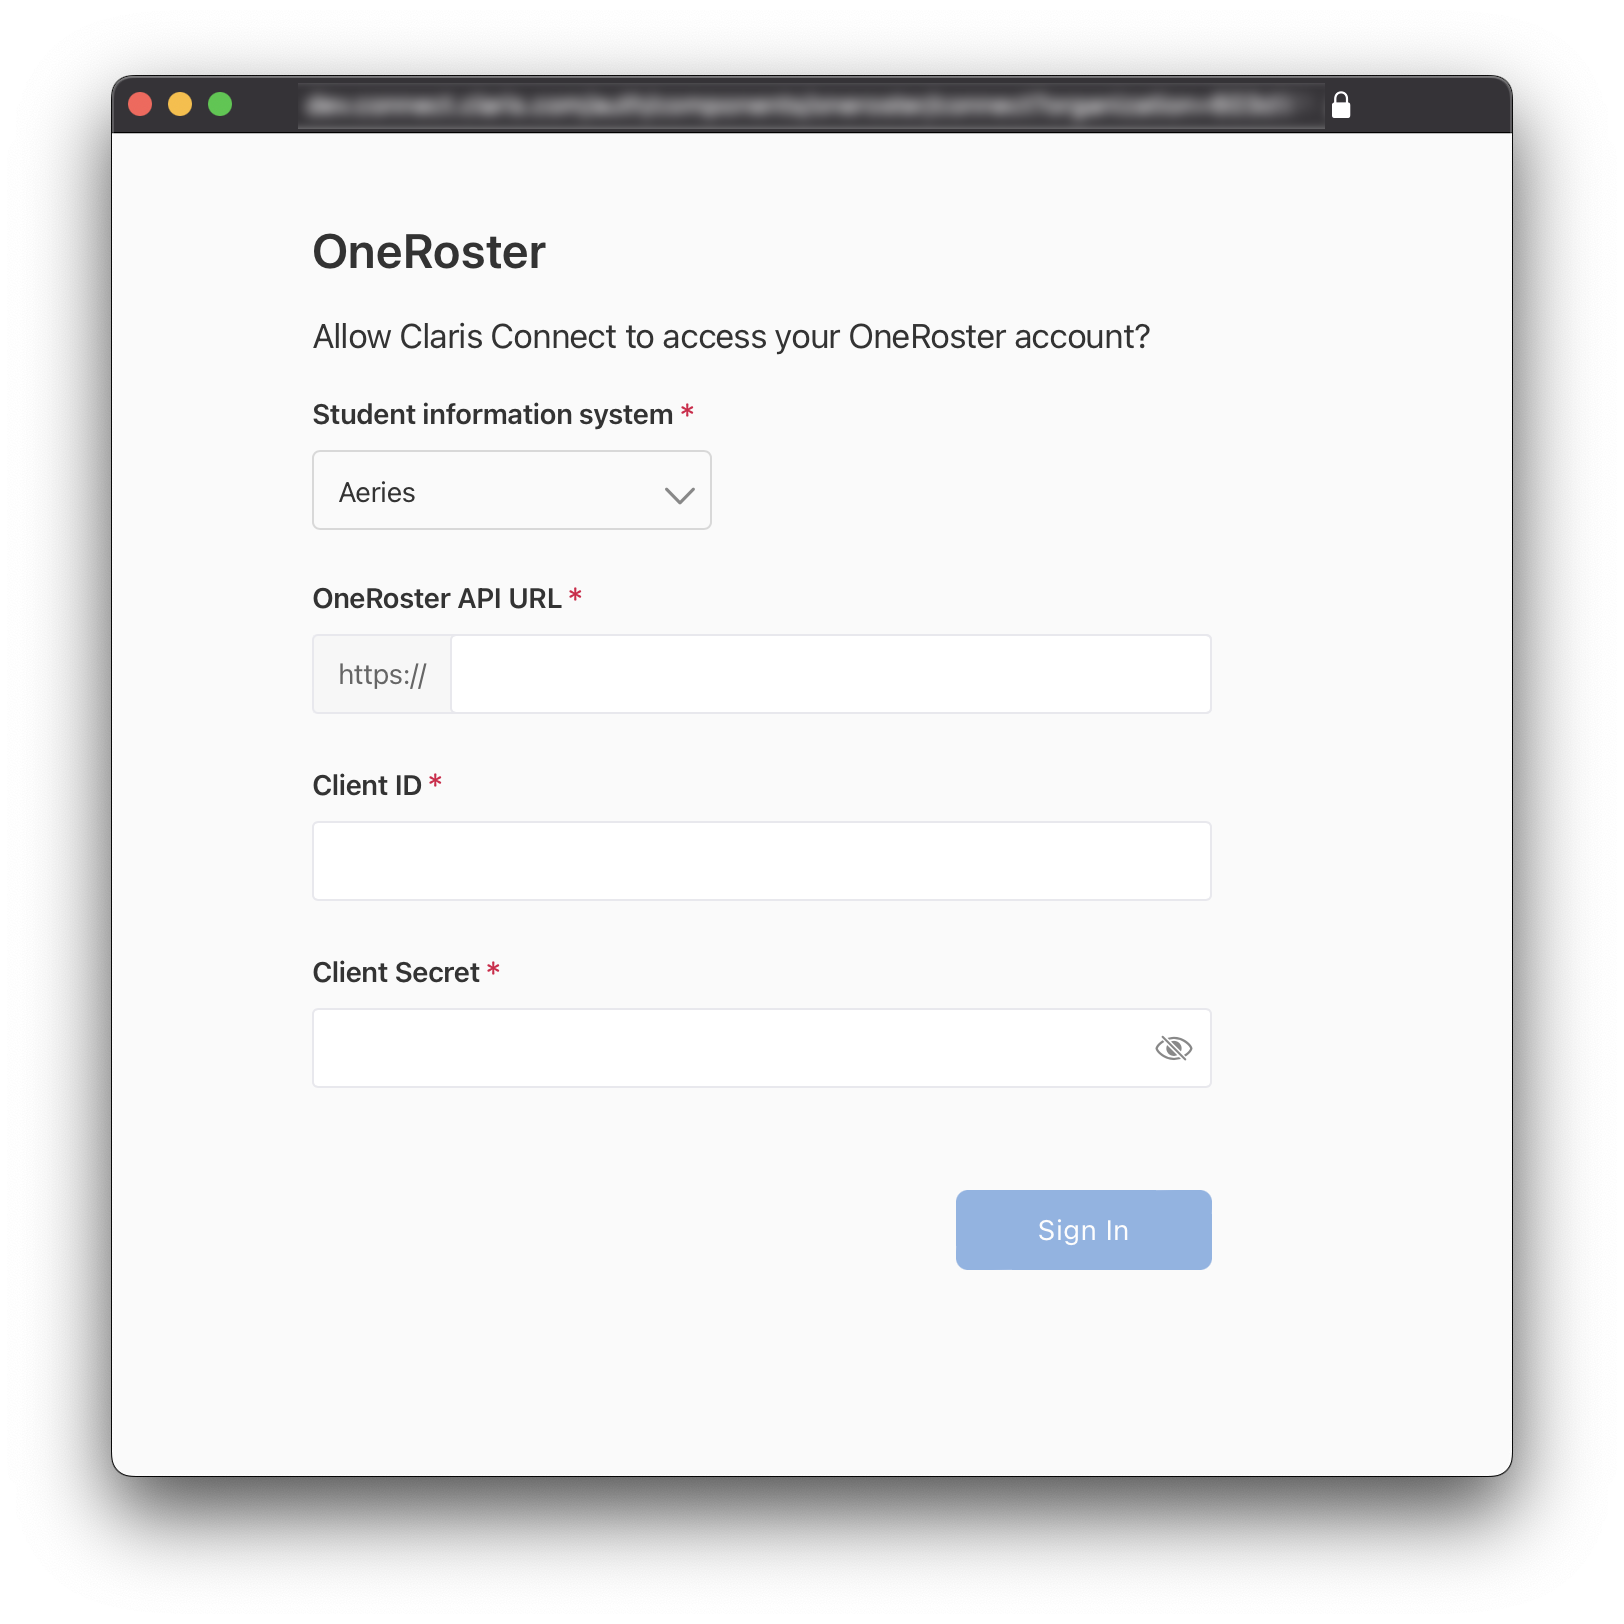 [OneRoster Connect New Account] ダイアログボックス、学生情報システムを選択する